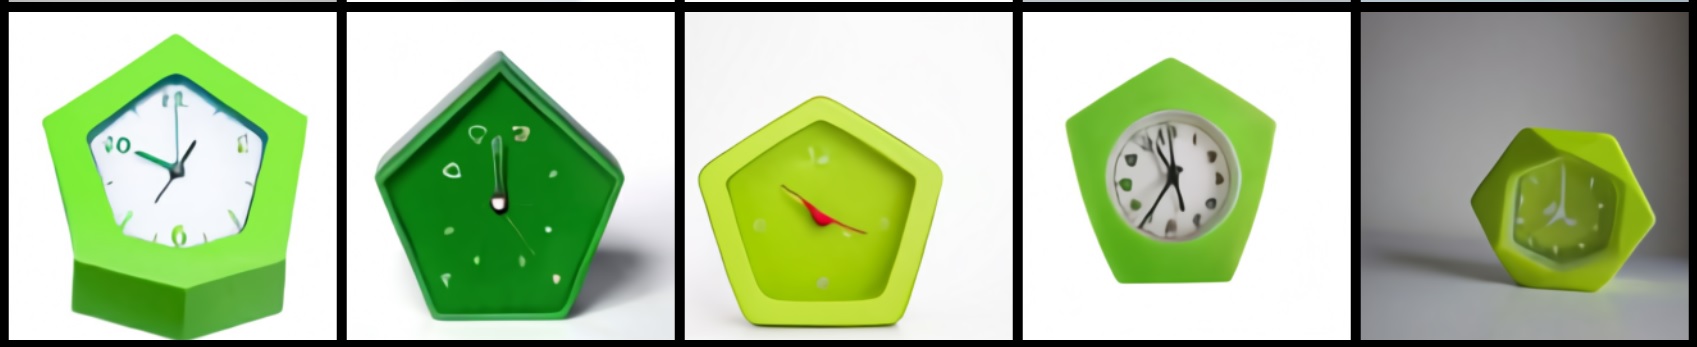 pentagon_green_clock